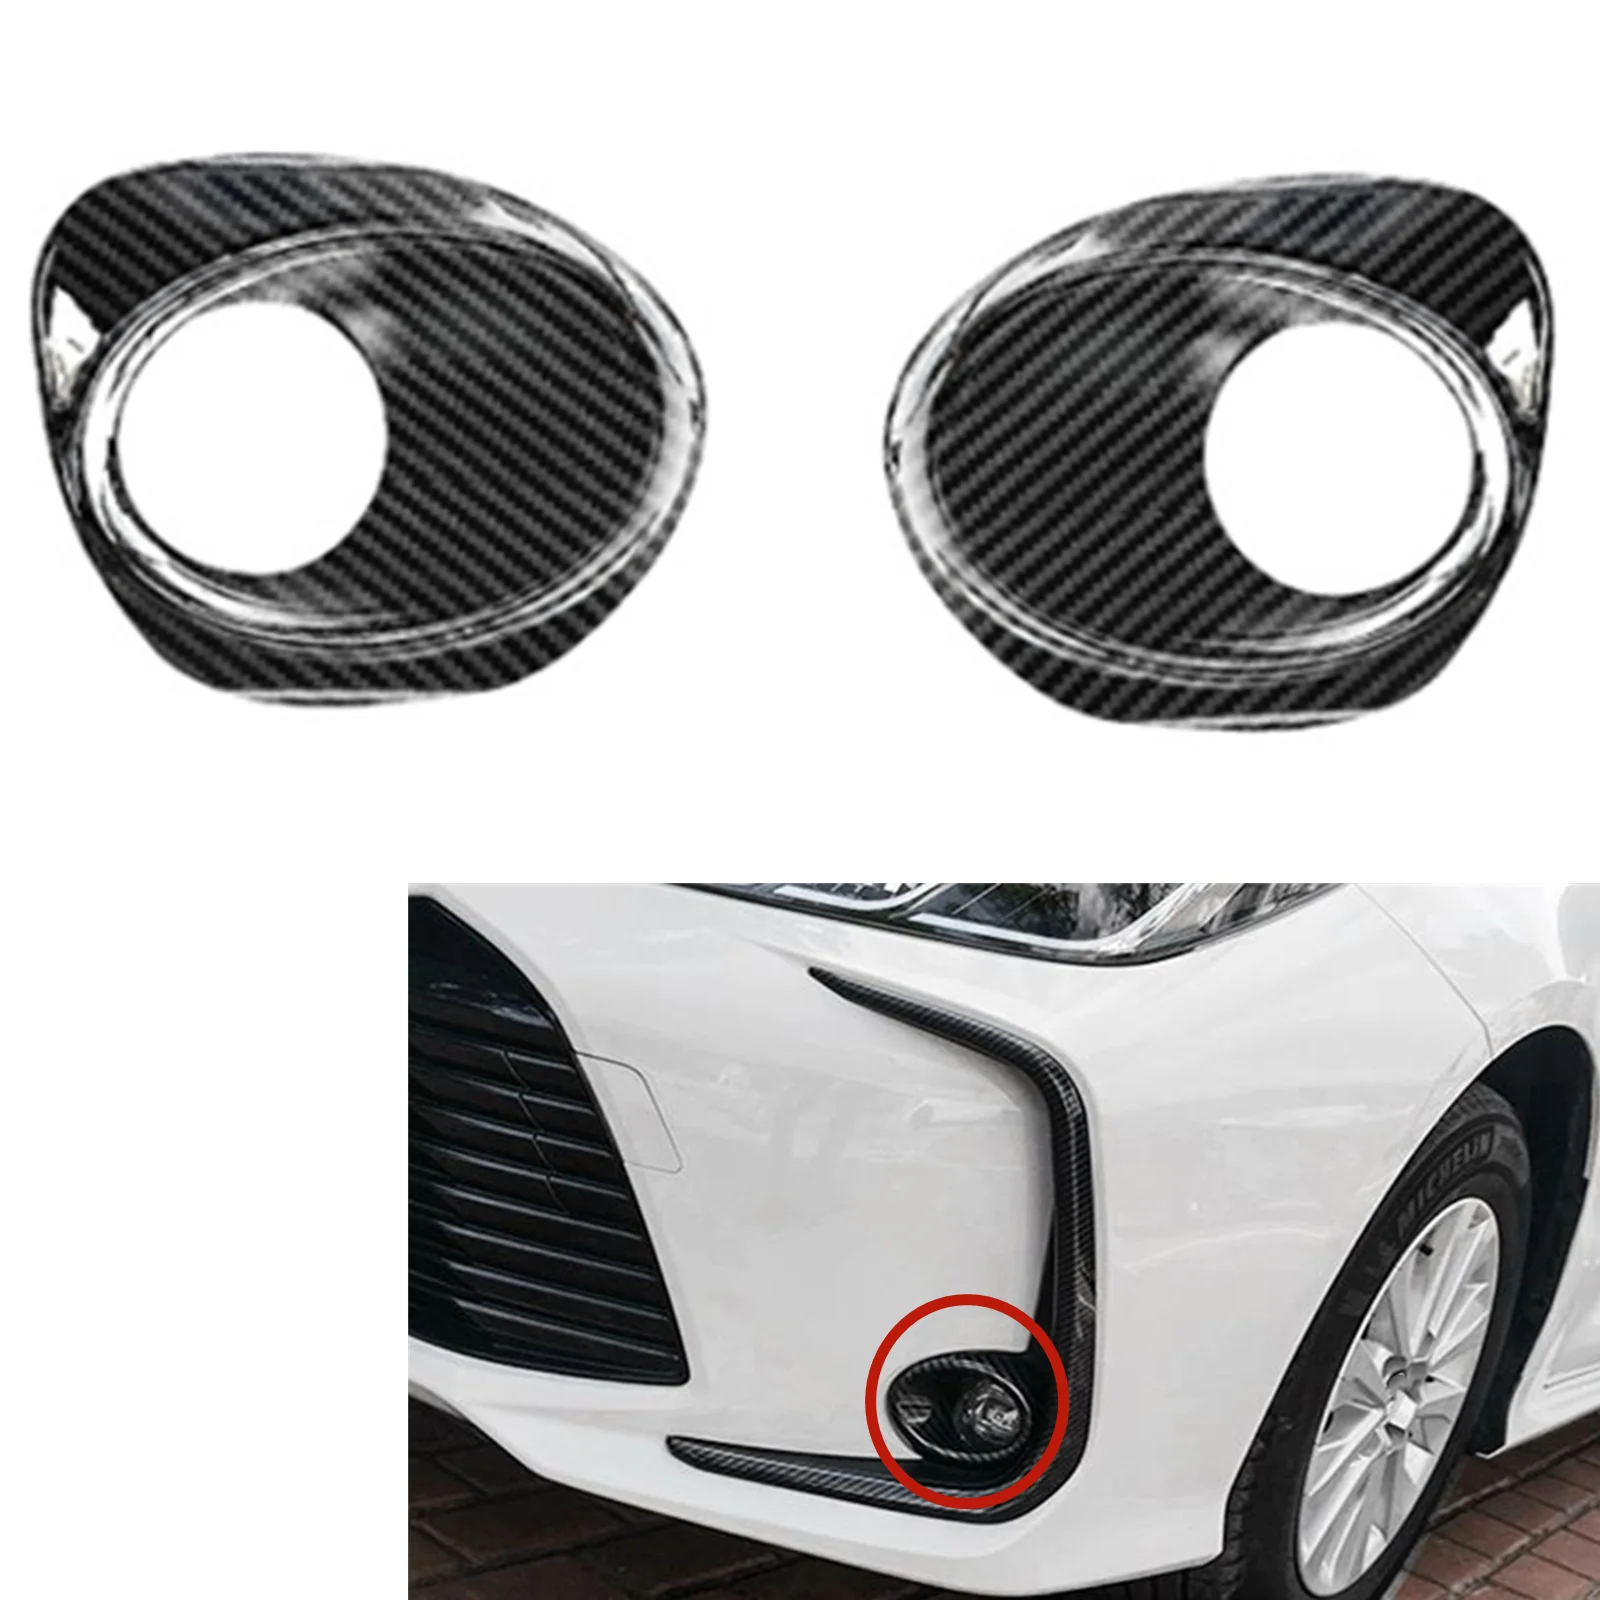 

Front Fog Light Cover Trim For Toyota Corolla 2019-2021 Carbon Fiber Look/Silver Chrome Bumper Intake Lamp Frame Moulding Strip